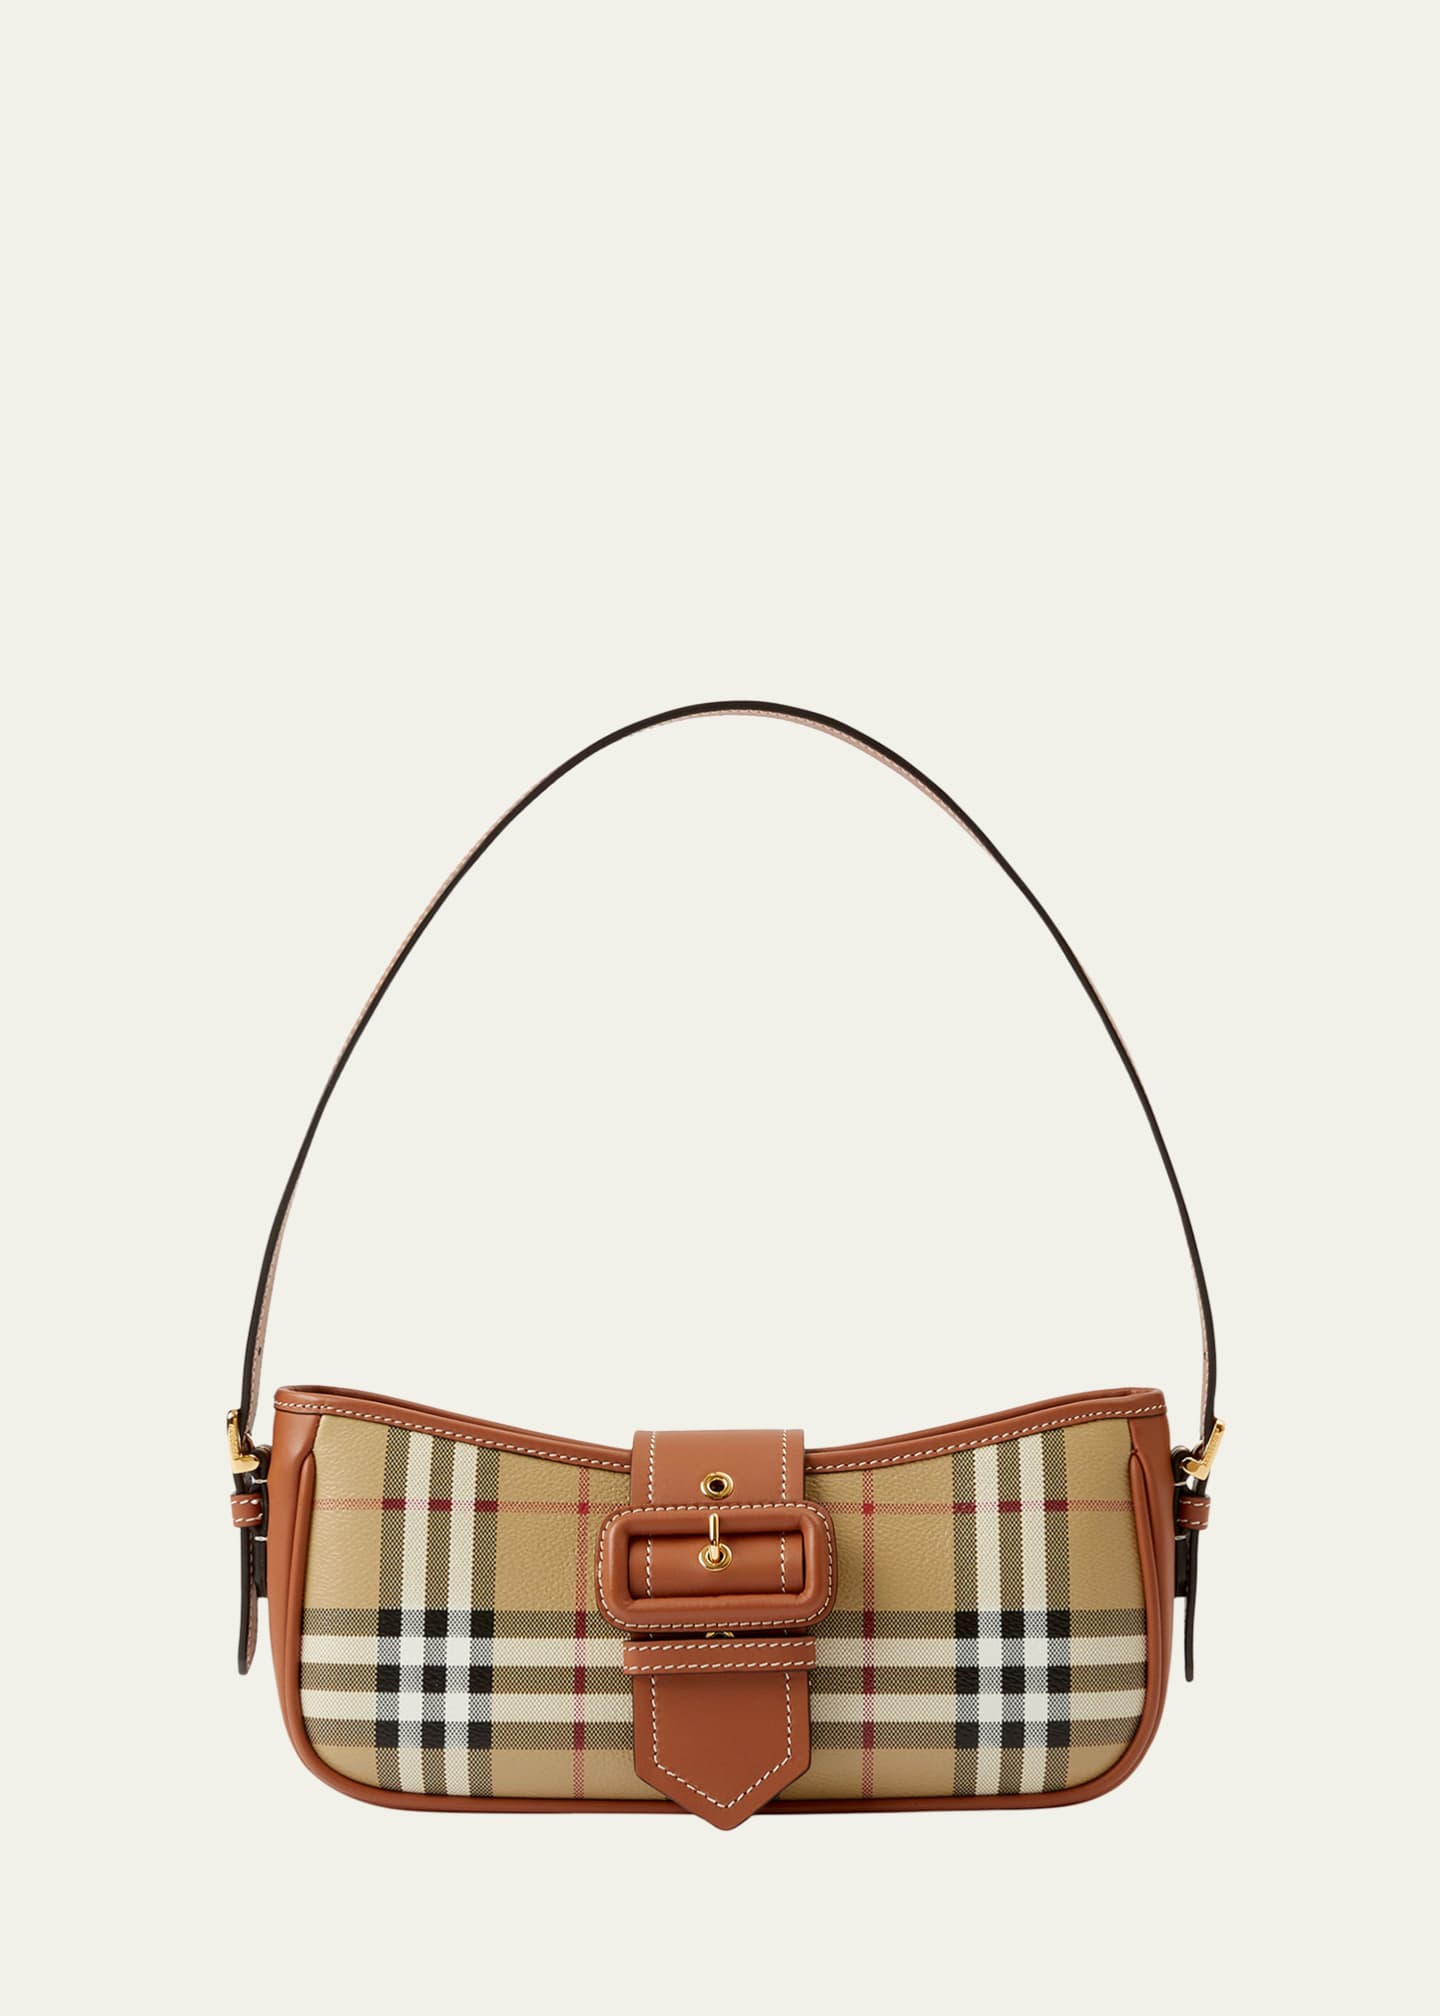 Burberry Pink Nova Check Handbag (authentic) for Sale in